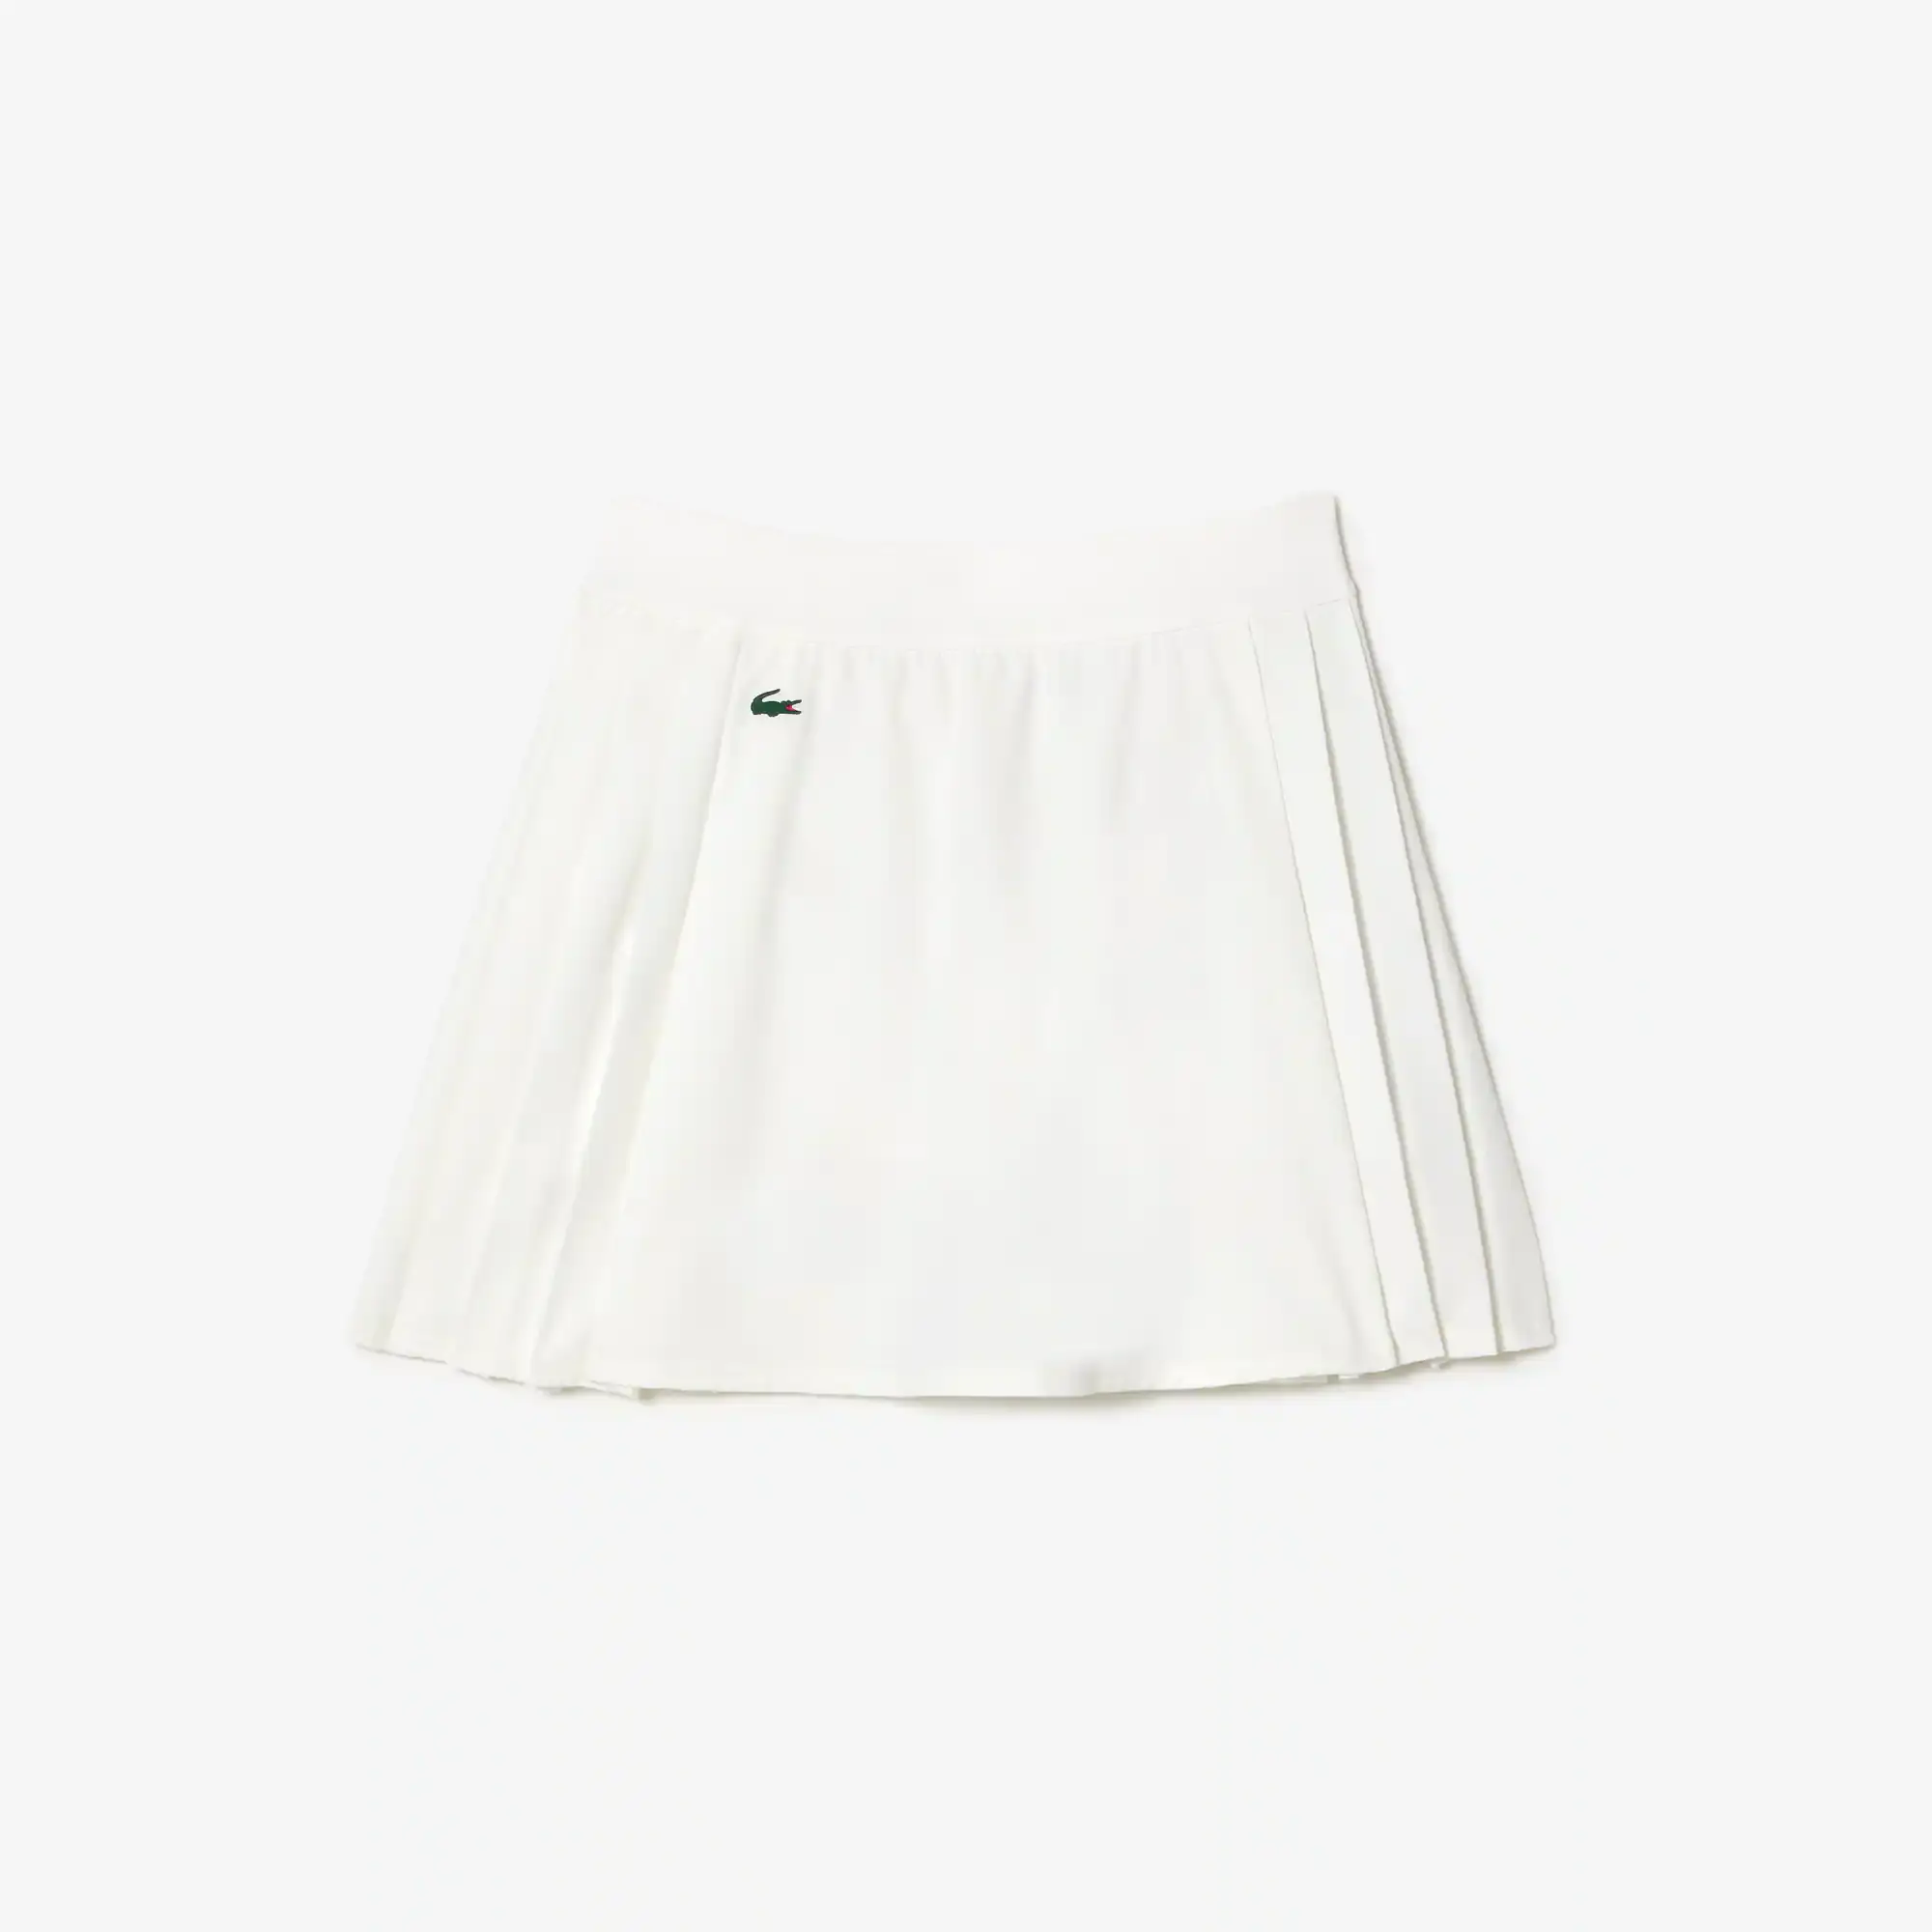 Lacoste Women's SPORT Golf Skirt. 2